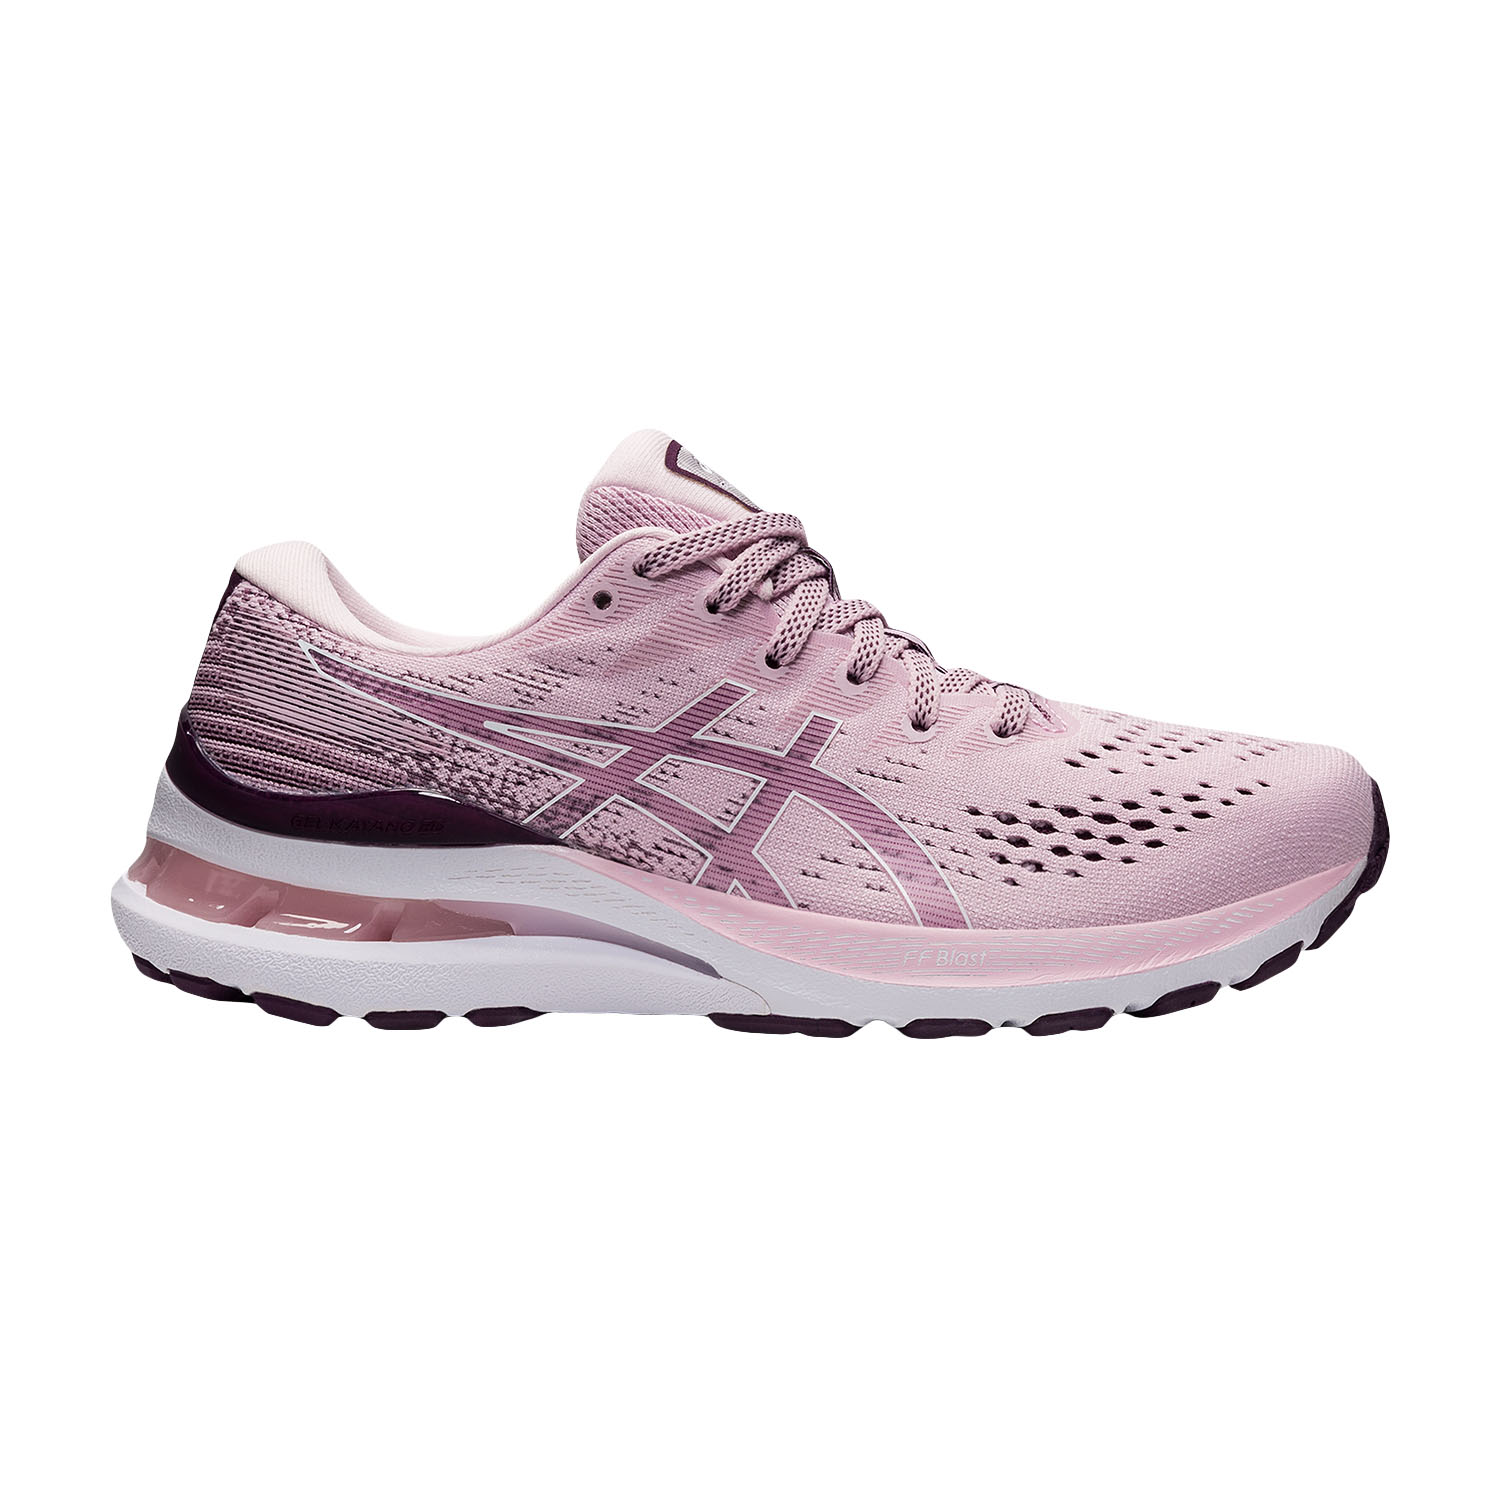 Asics Gel Kayano 28 Women's Running Shoes - Barely Rose/White